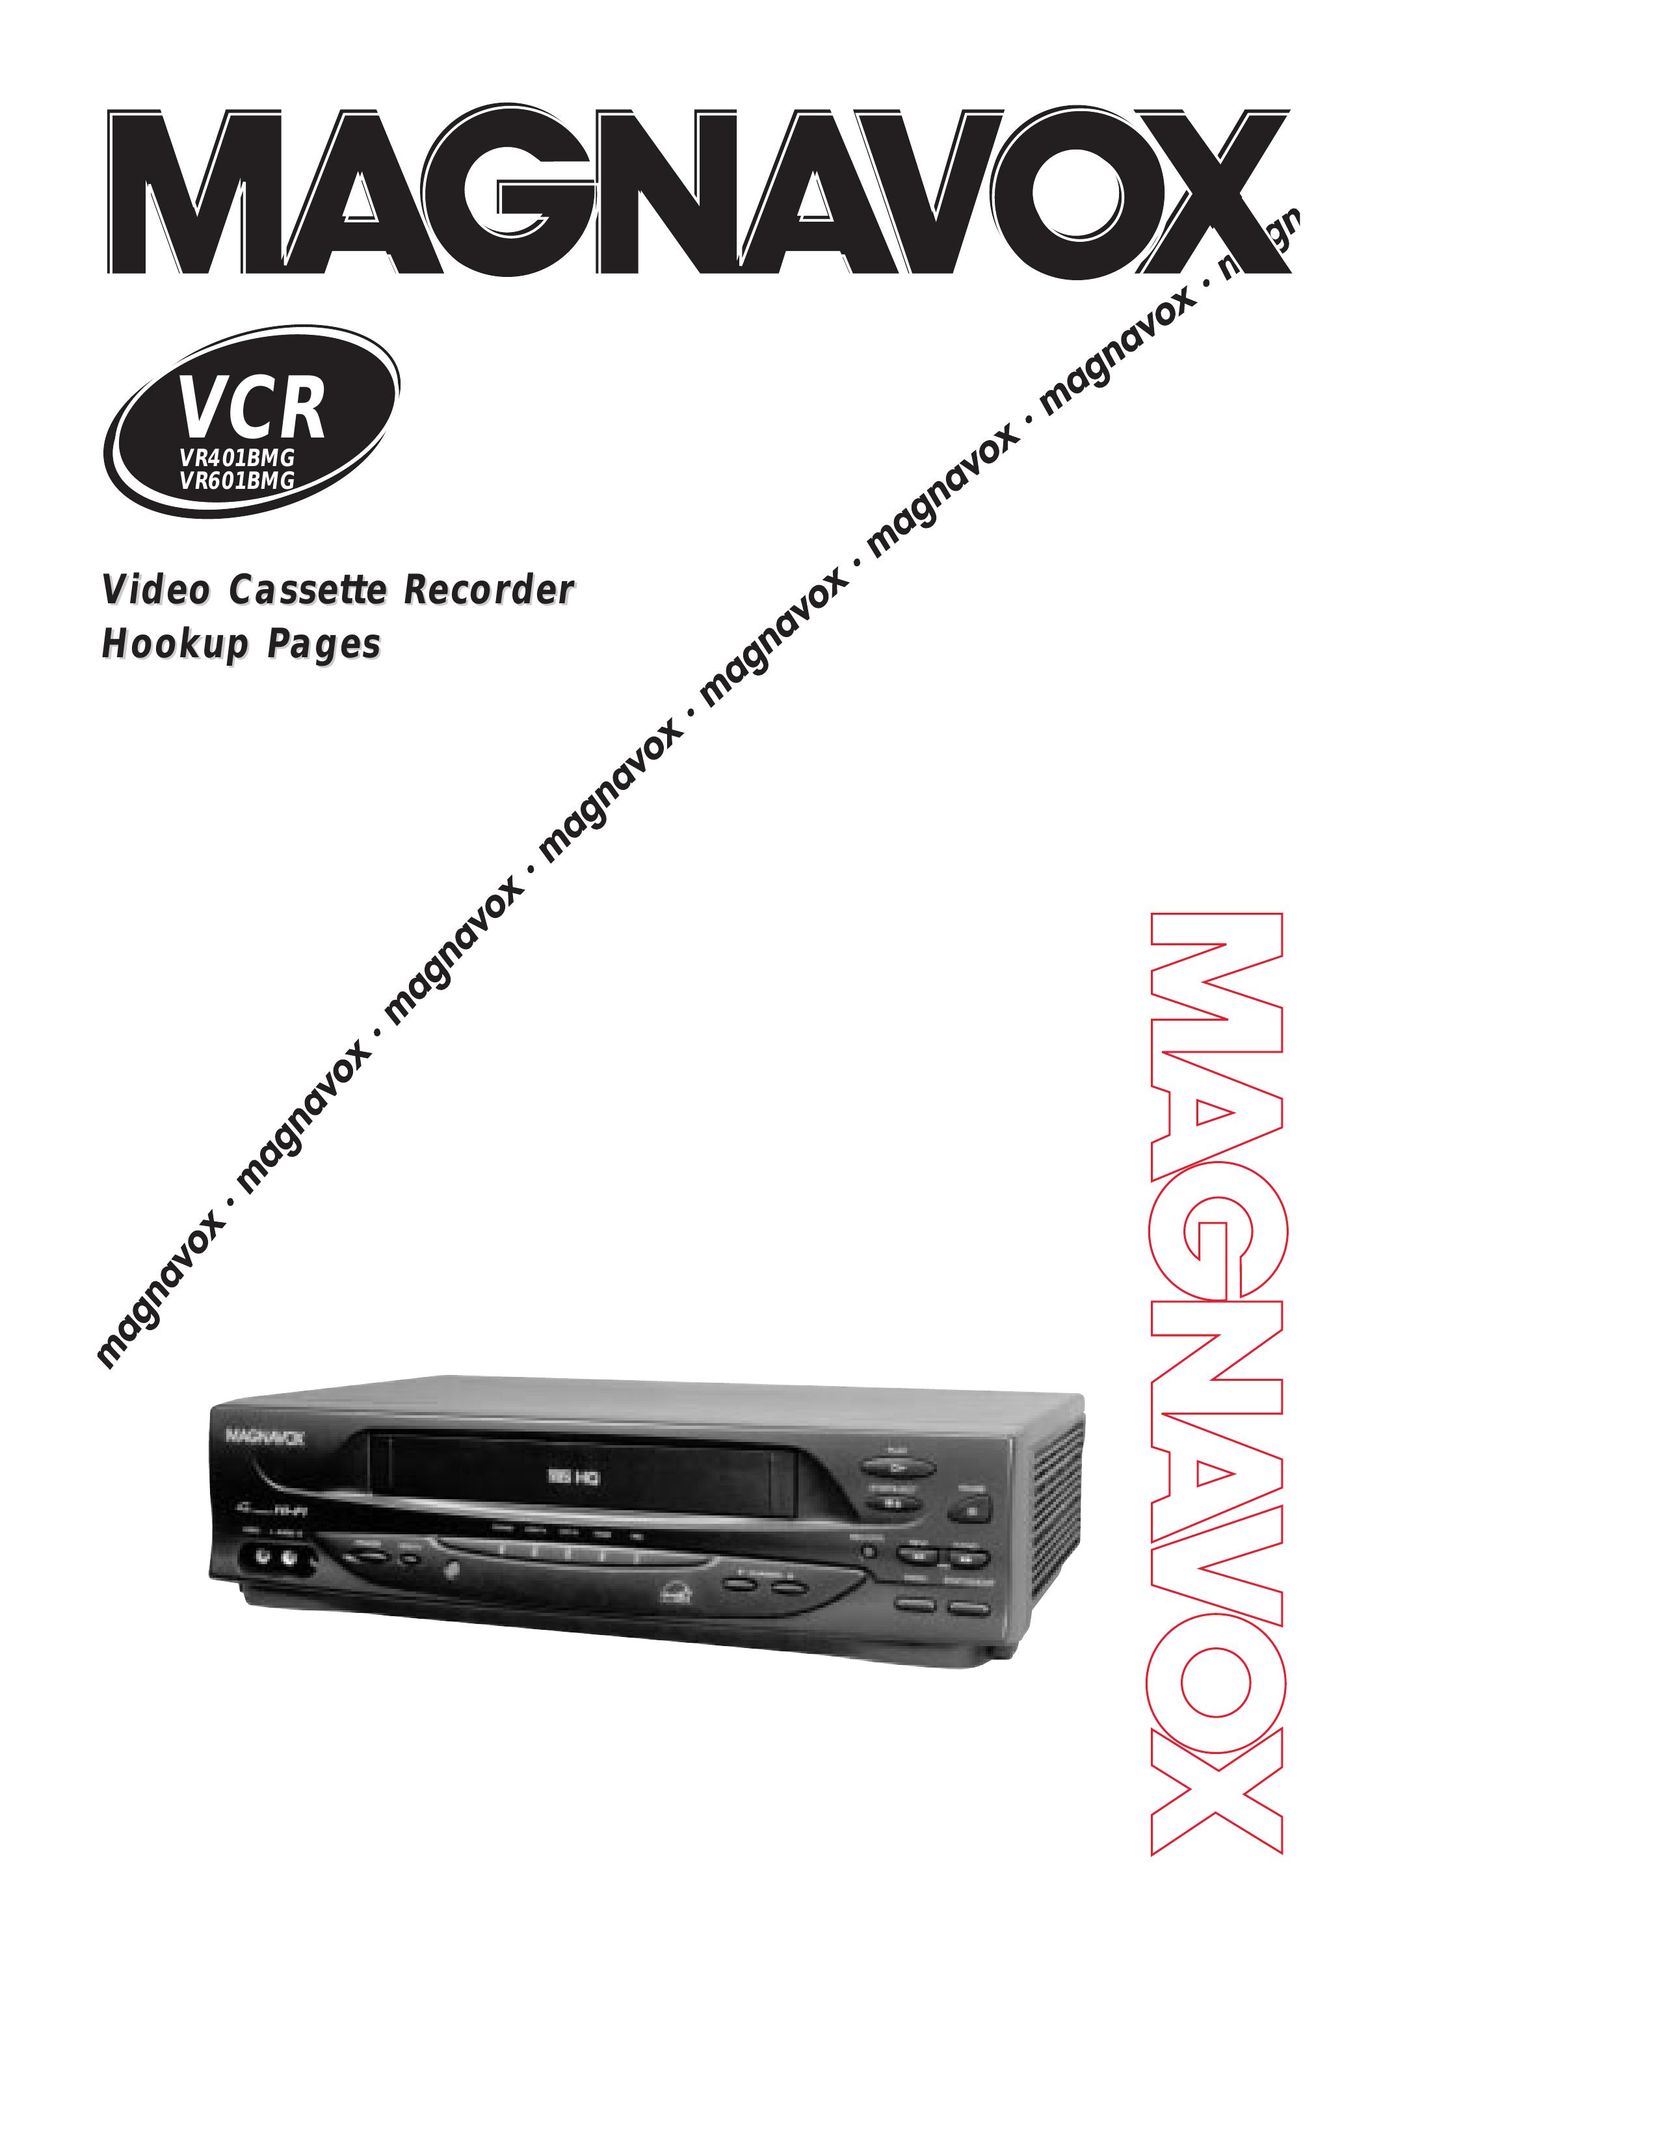 Magnavox VCRVR401BMG VCR User Manual